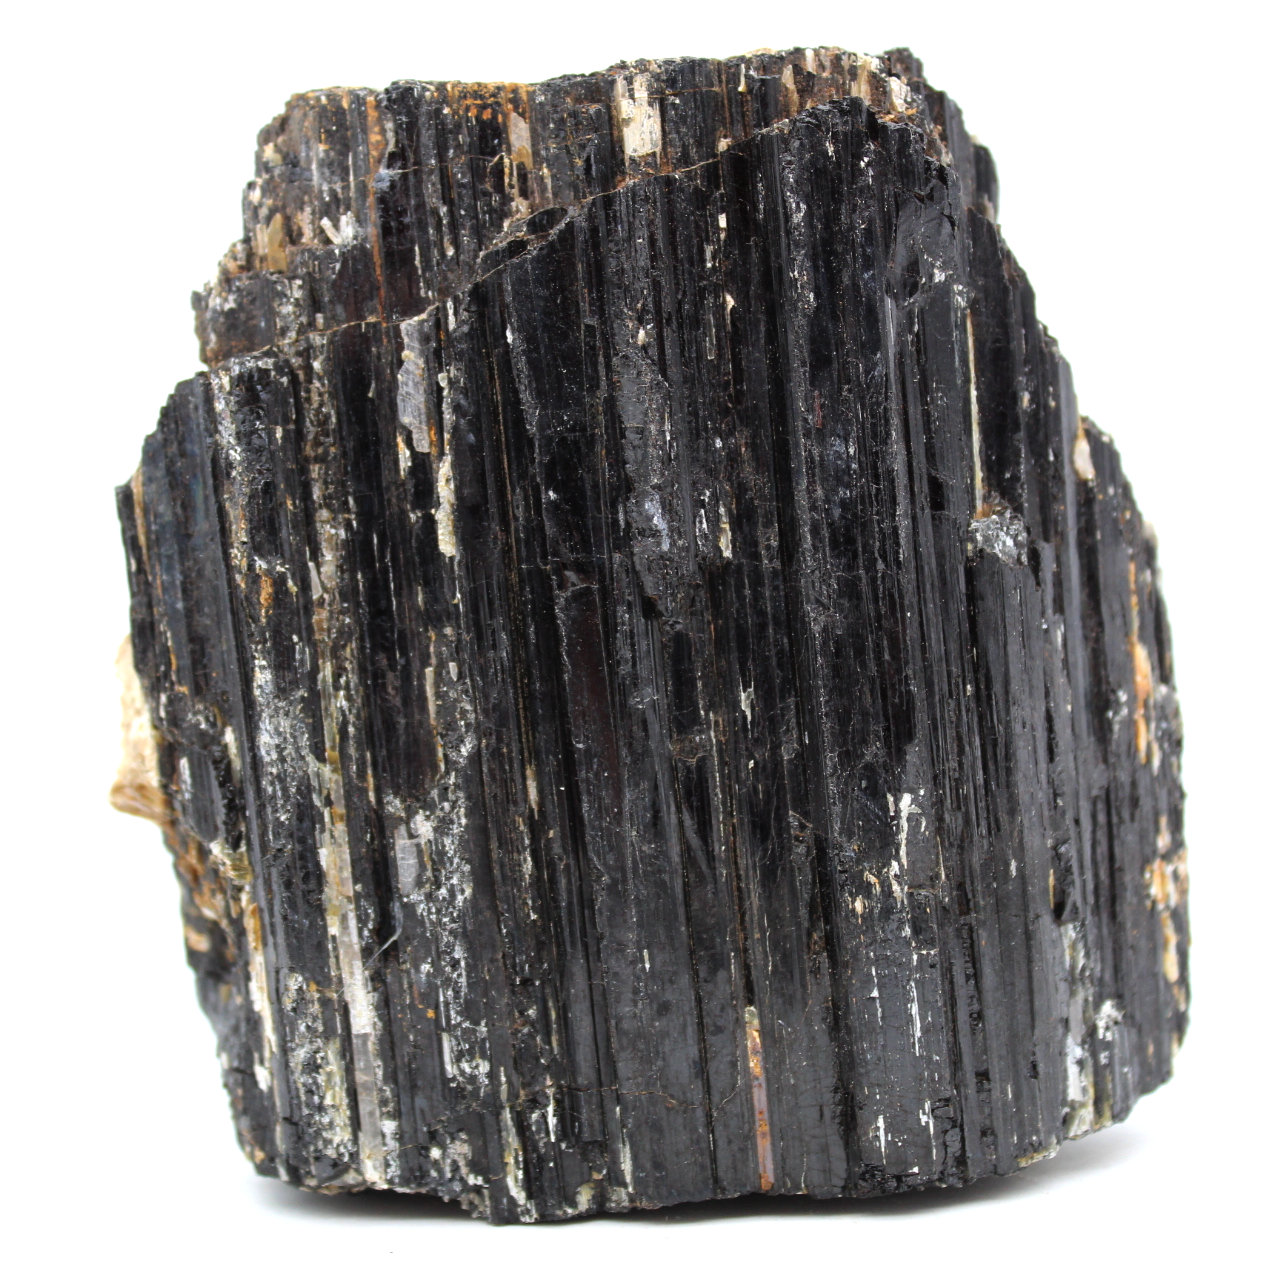 Black Tourmaline crystallization